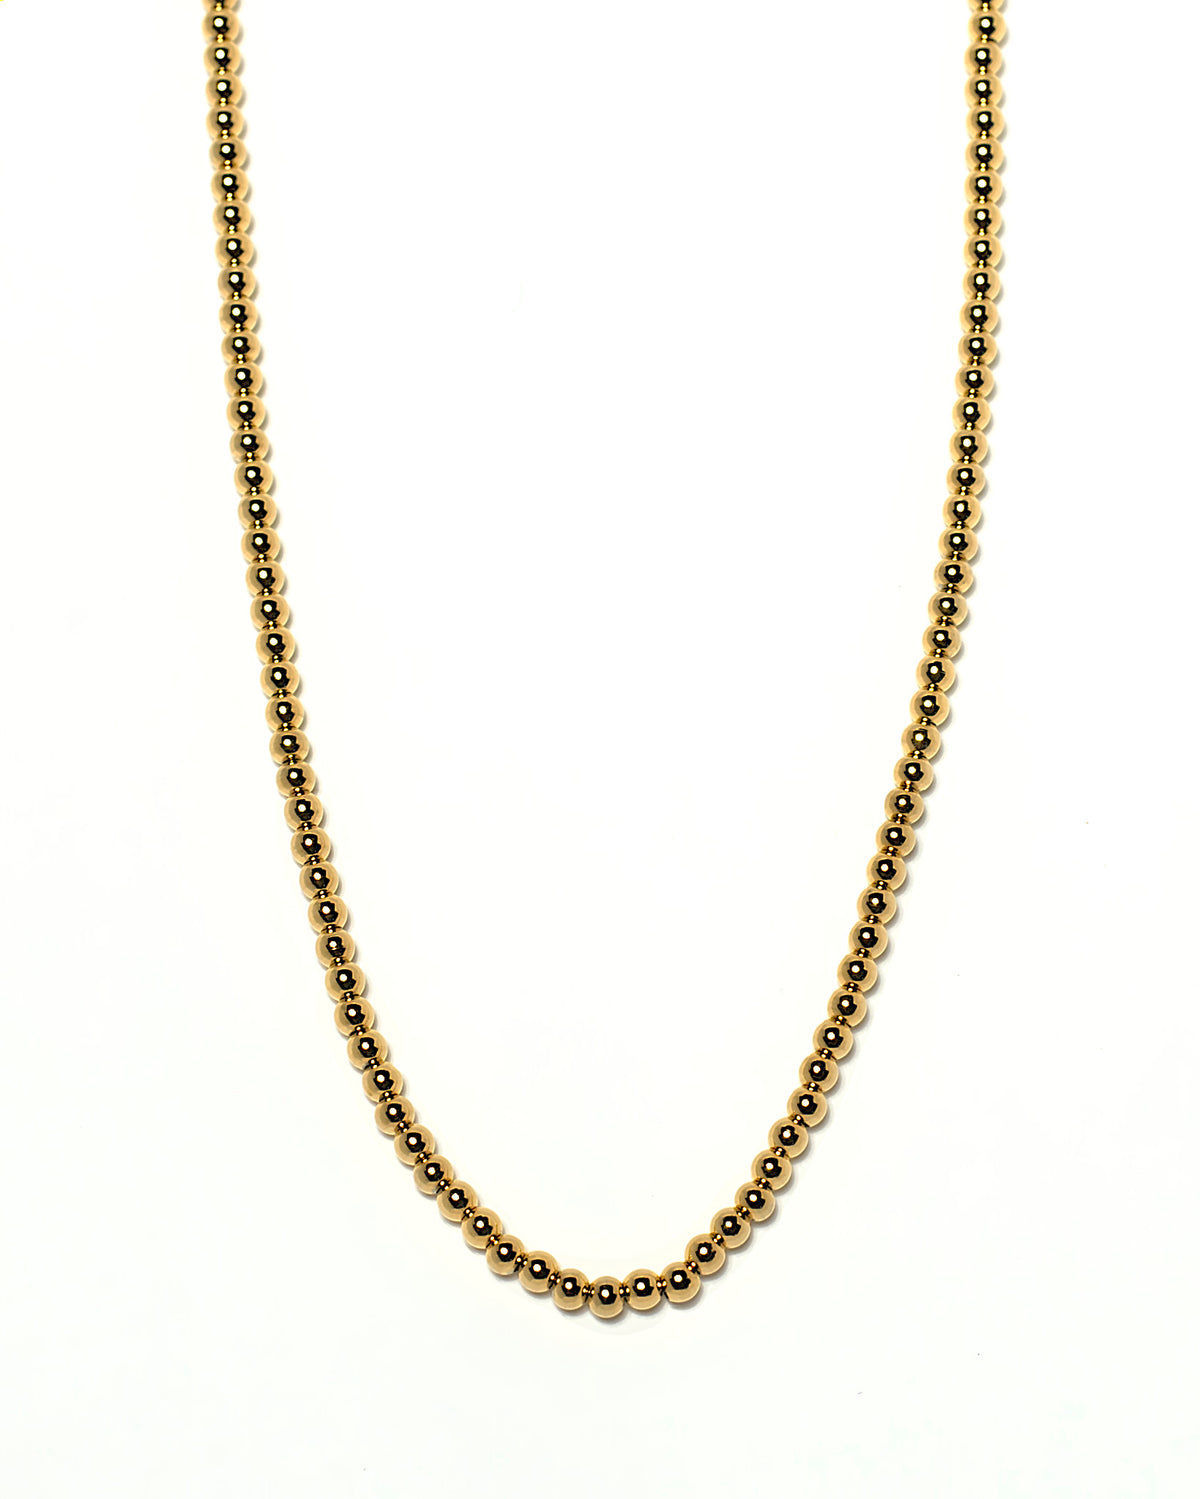 gold necklace bead minimalist modern trendy near me shop online boutique jewelry